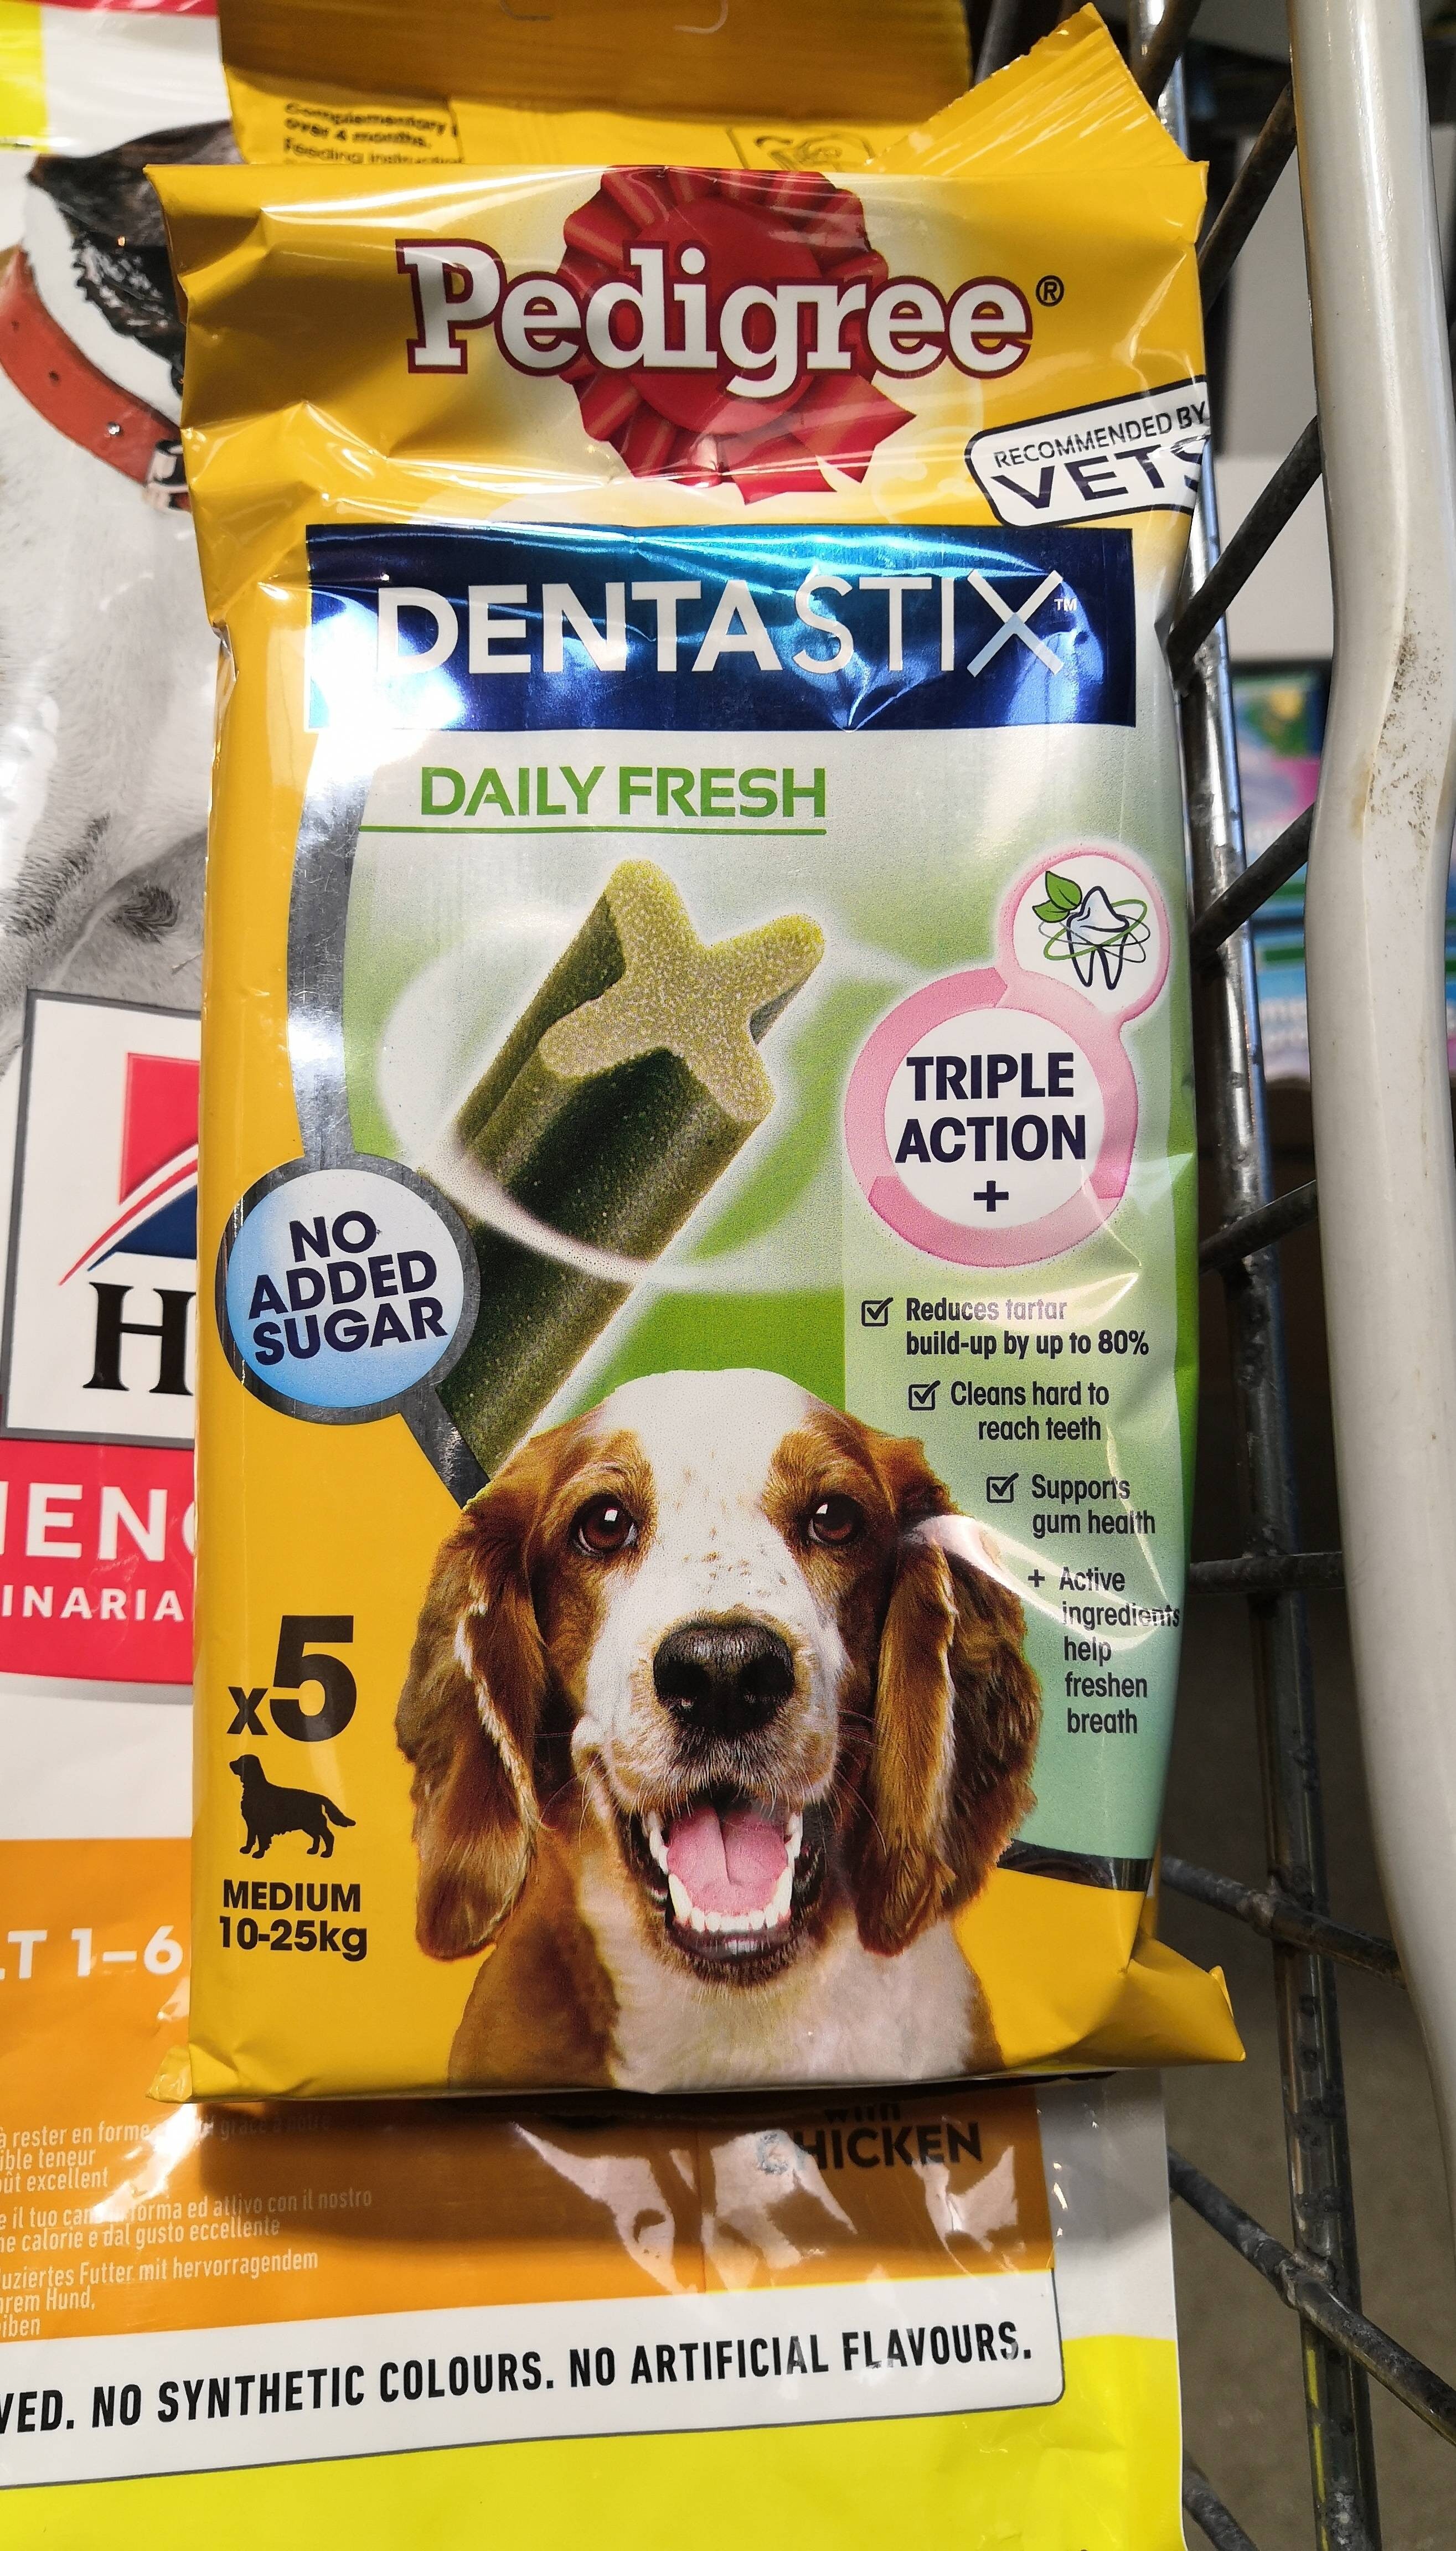 Pedigree dentastix daily fresh - Product - en